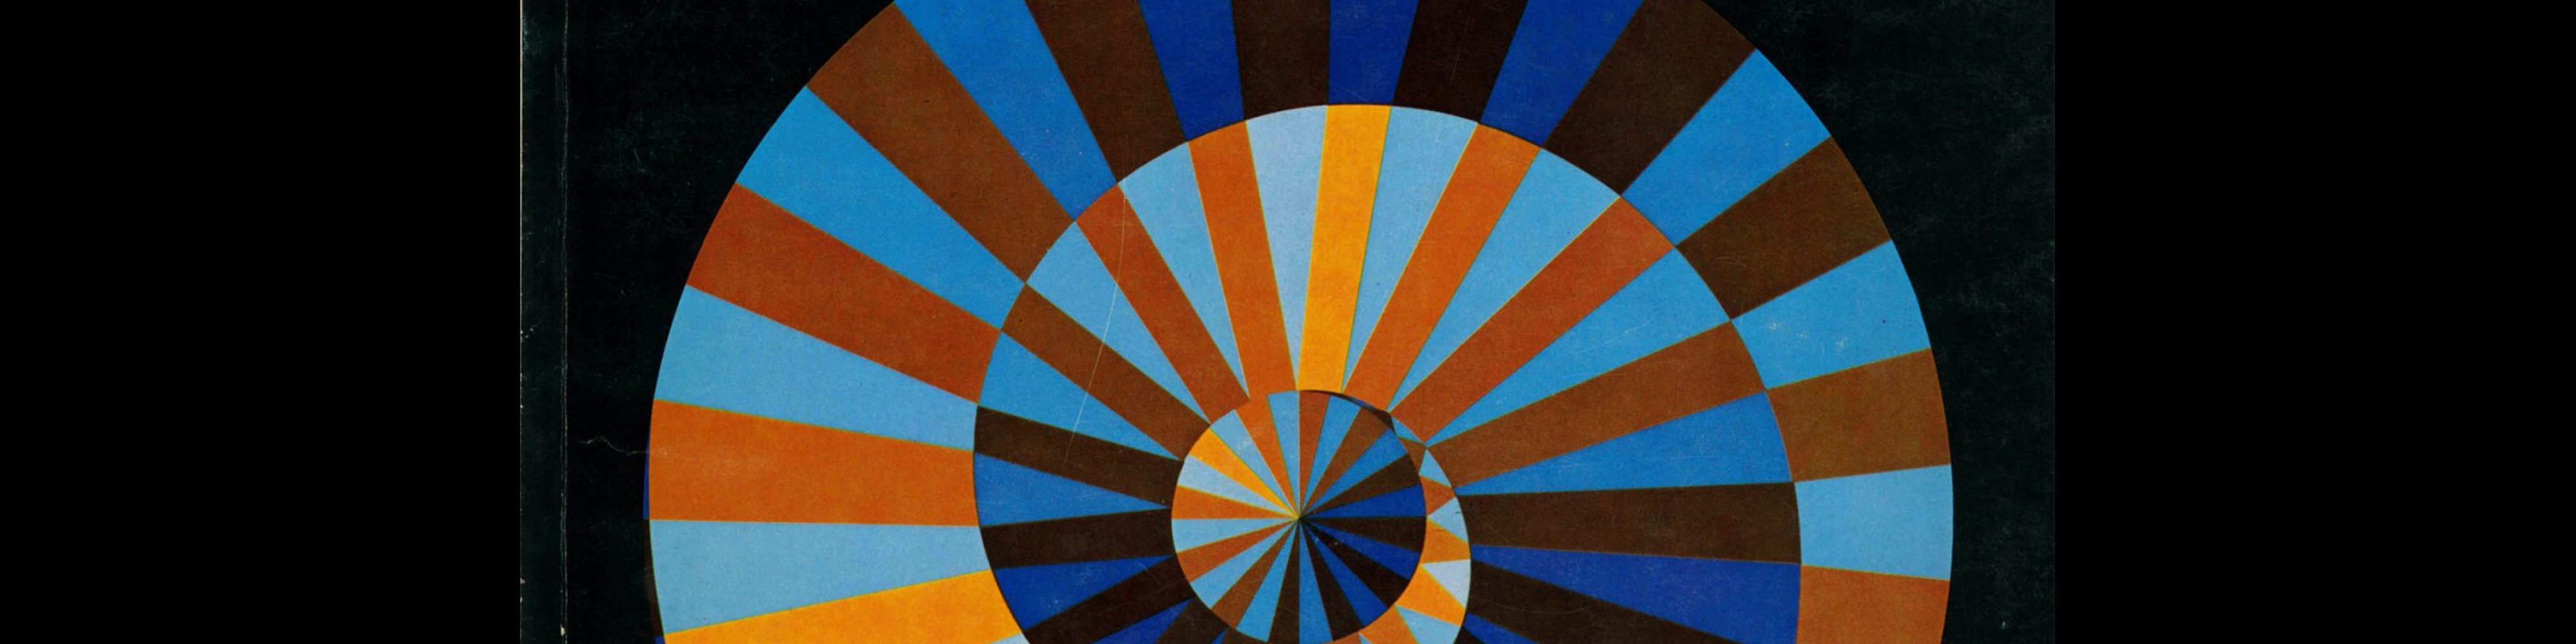 Gebrauchsgraphik, 2, 1972. Cover design by Victor Vasarely